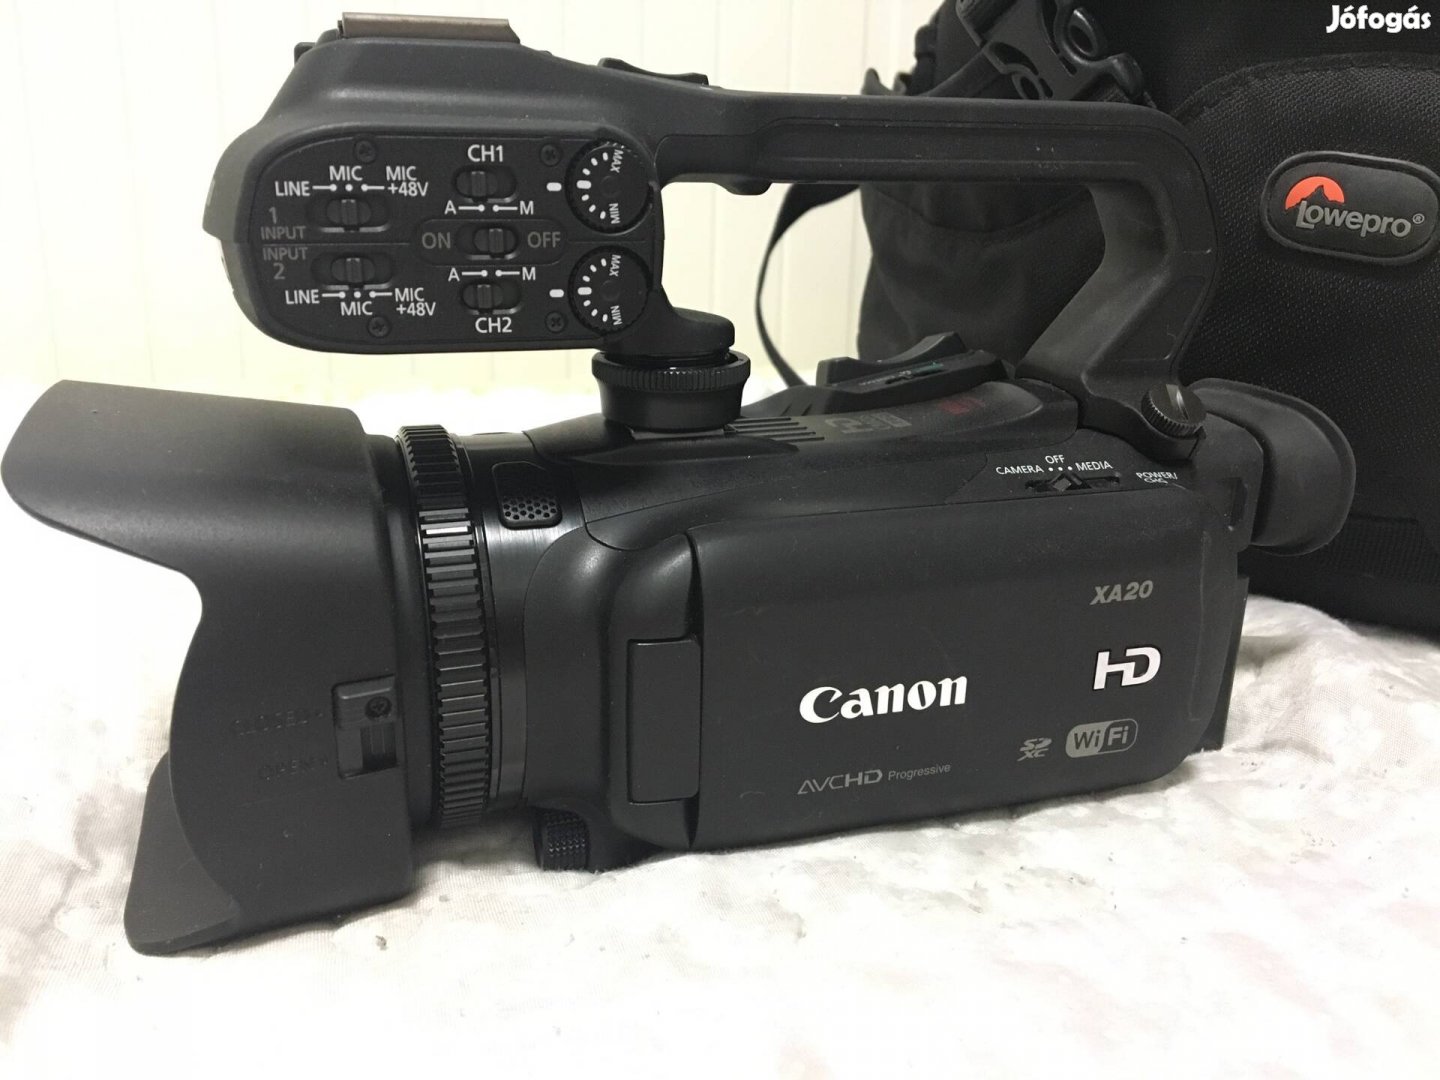 Canon XA20 kamera és tartozékai